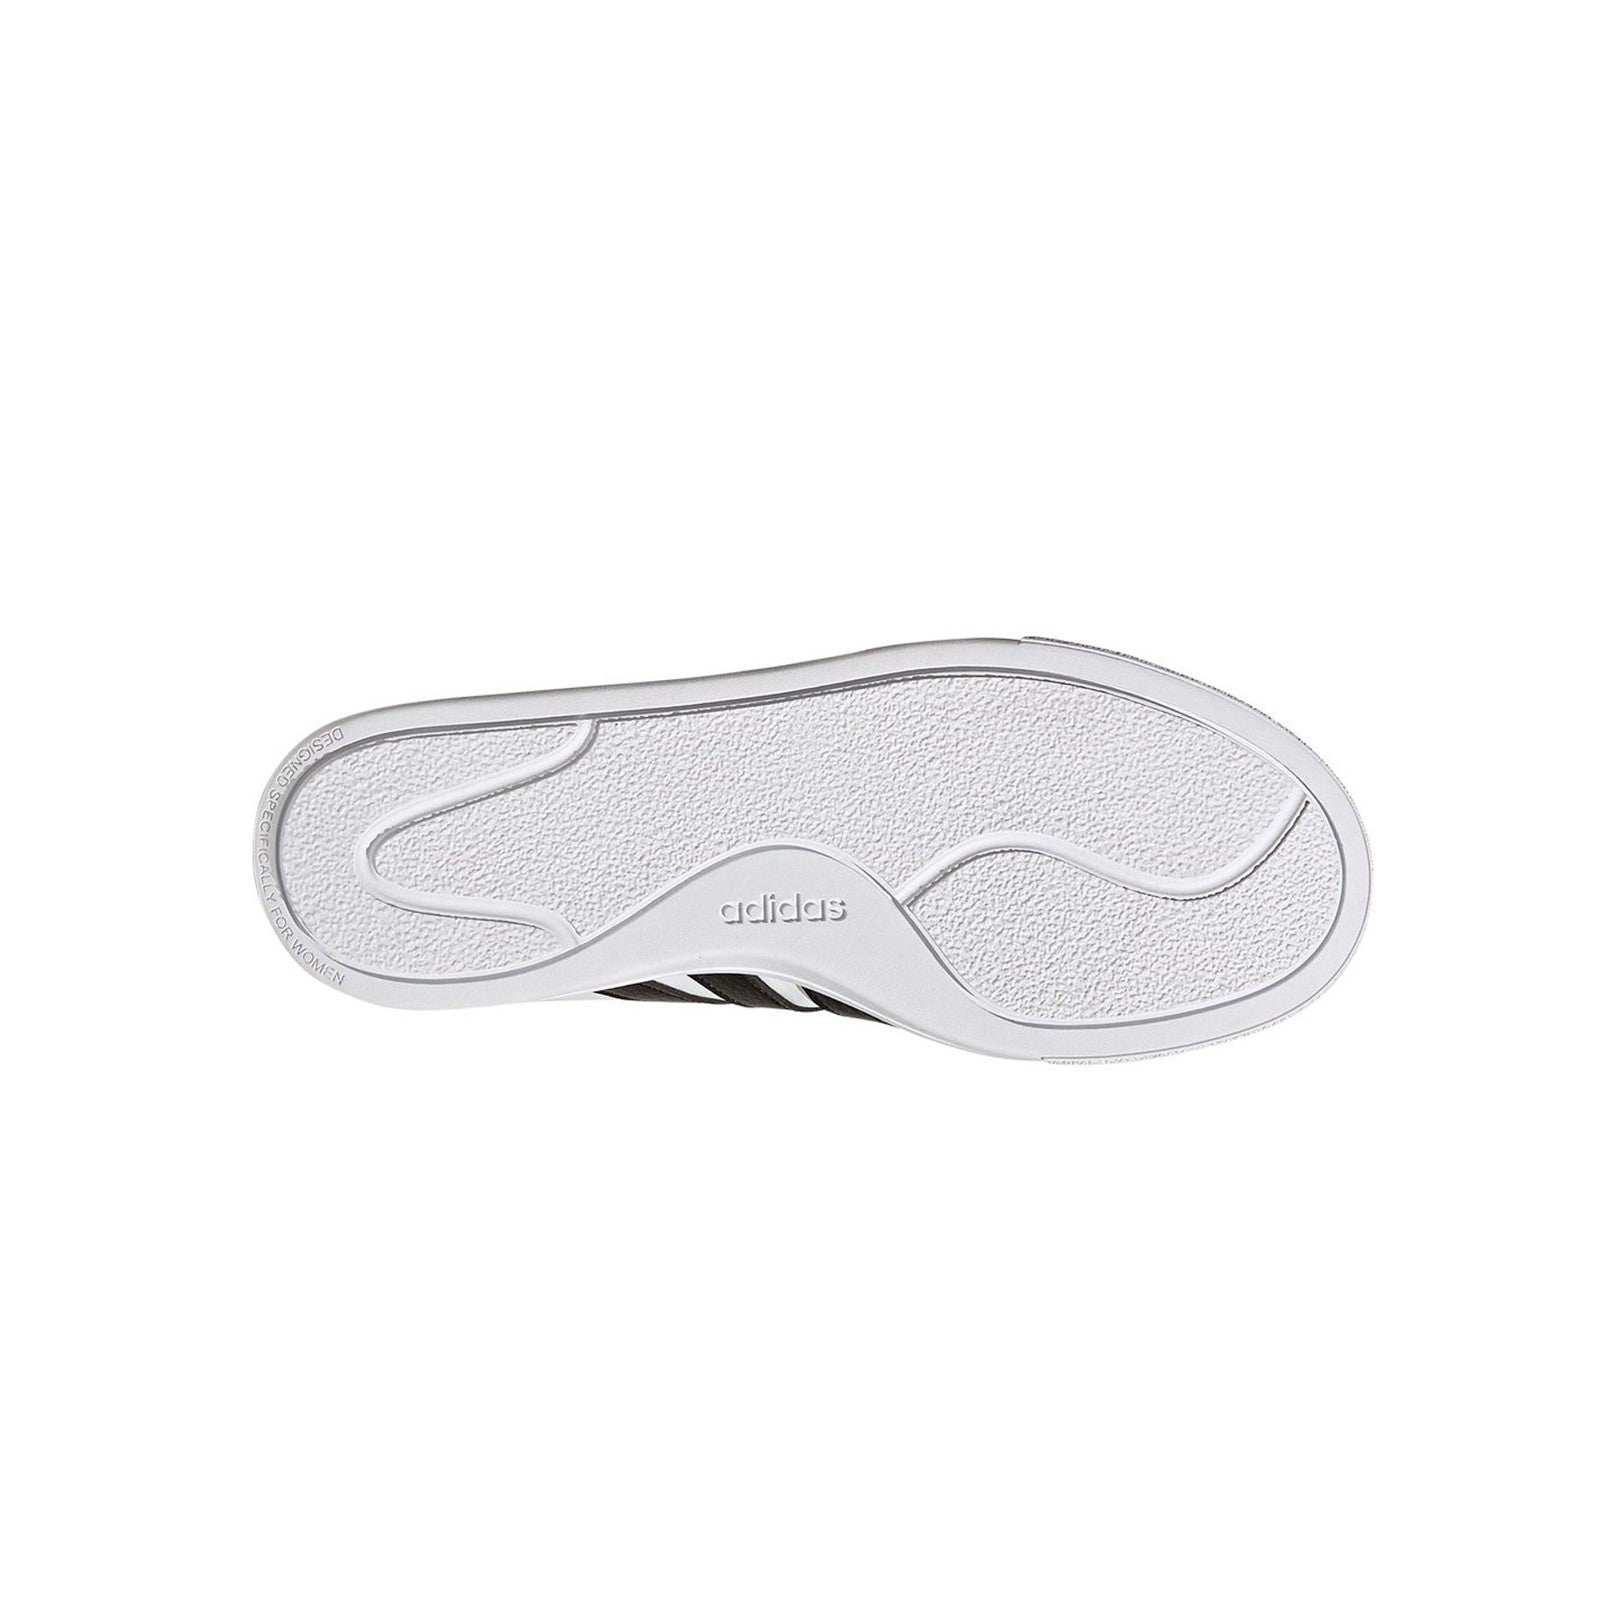 Adidas sneakers da donna con zeppa Court Platform HQ4532 bianco nero